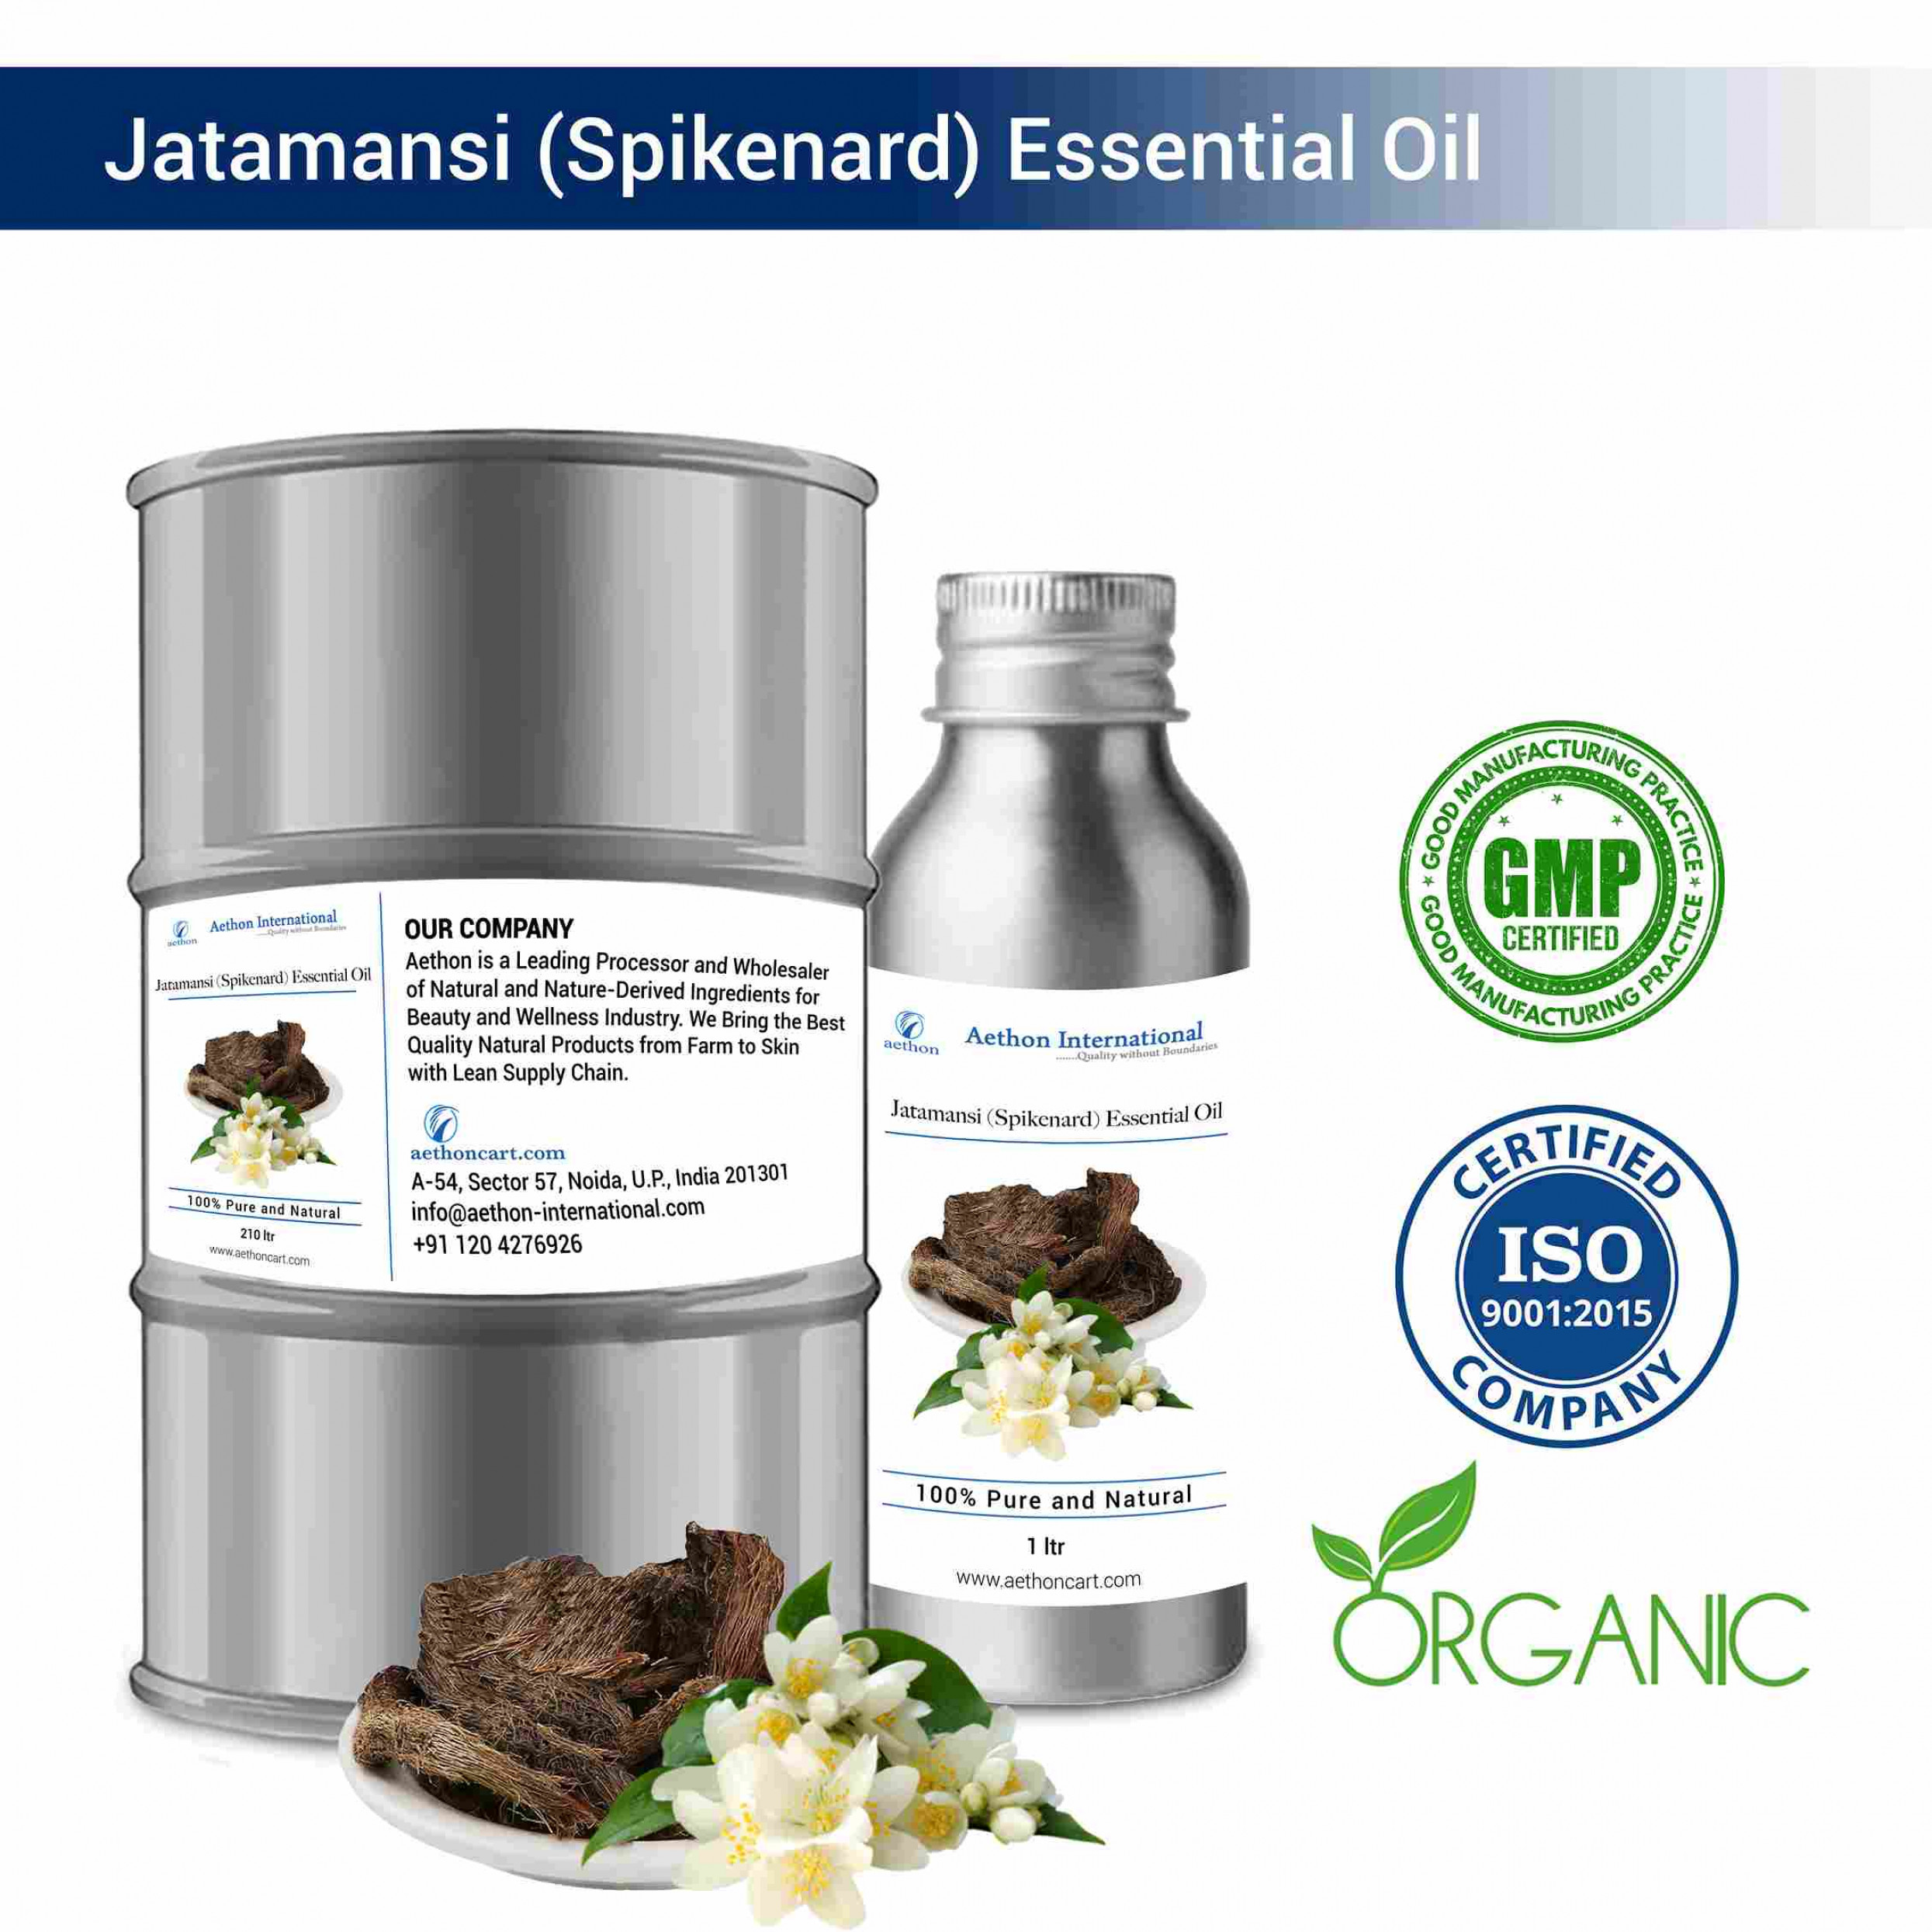 Jatamansi (Spikenard) Essential Oil